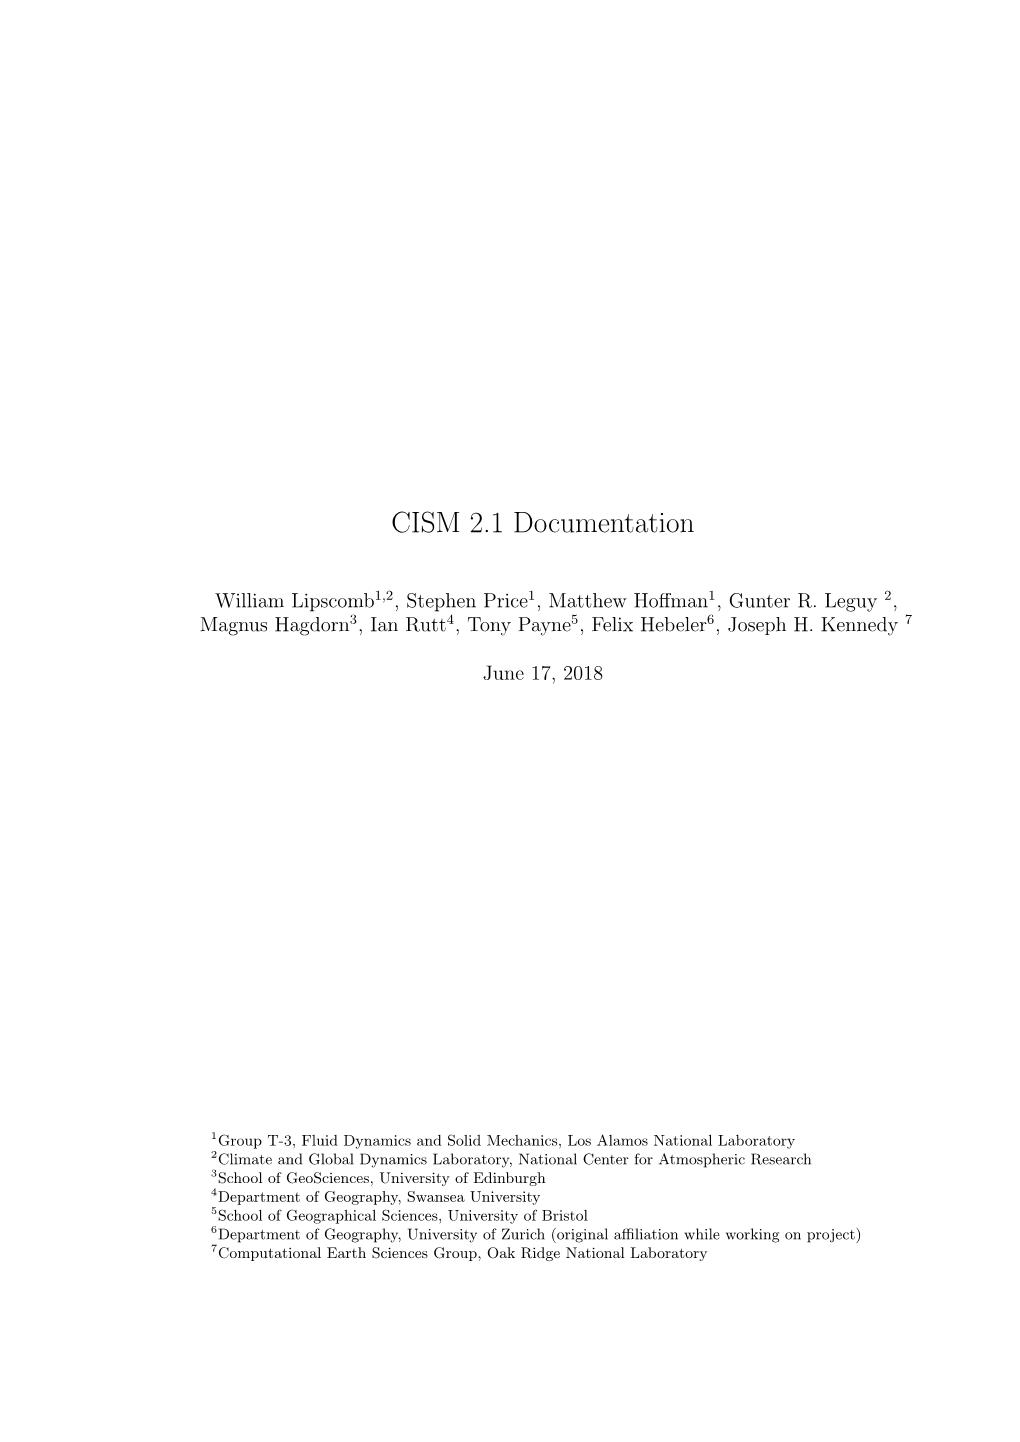 CISM Documentation